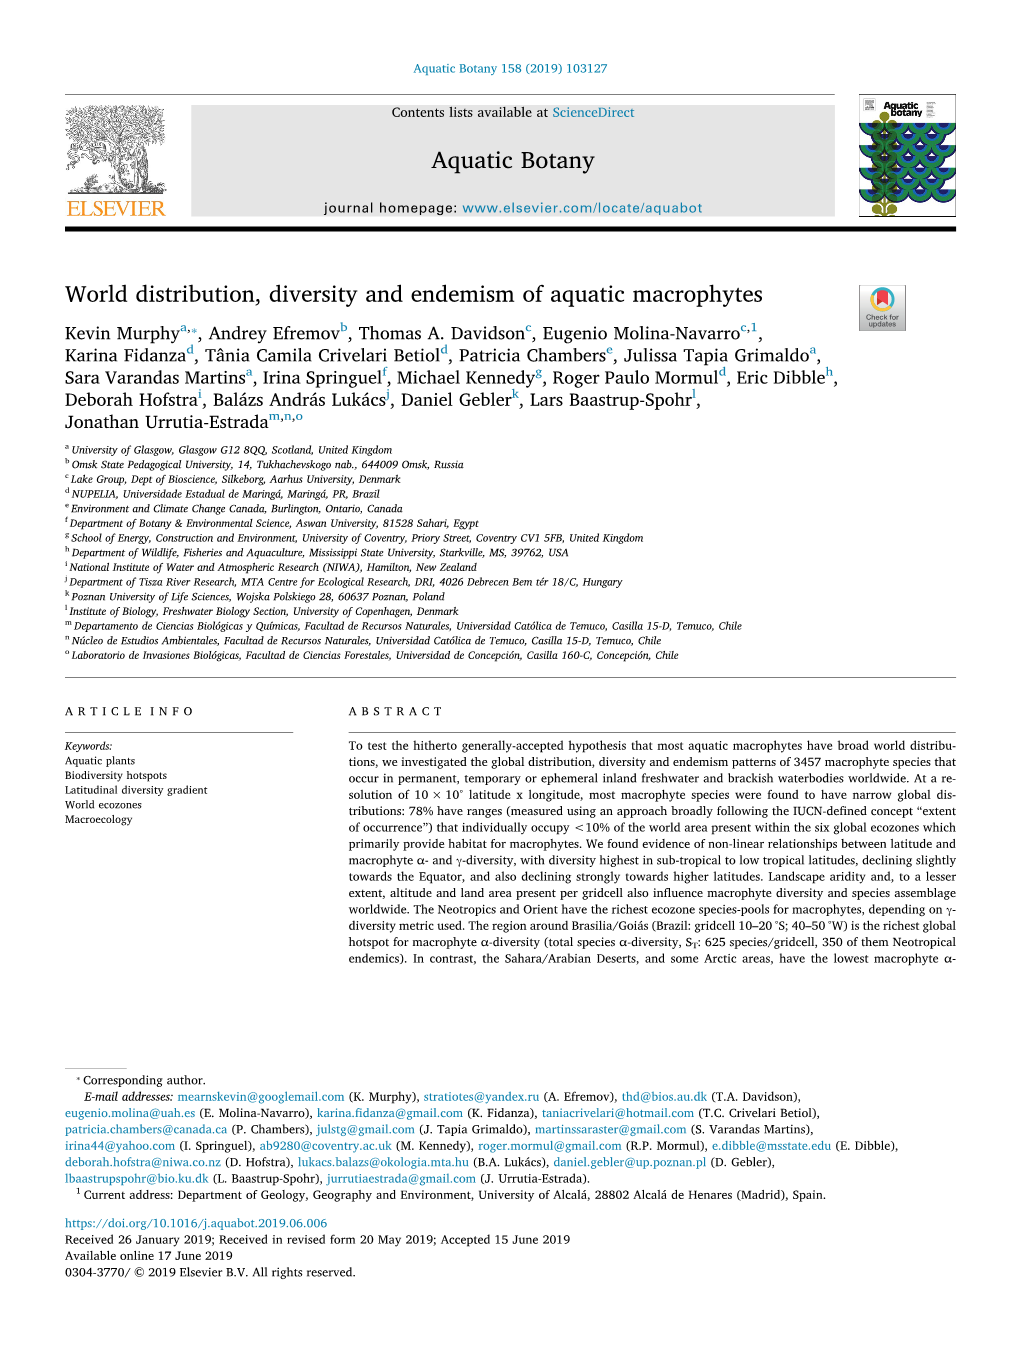 World Distribution, Diversity and Endemism of Aquatic Macrophytes T ⁎ Kevin Murphya, , Andrey Efremovb, Thomas A